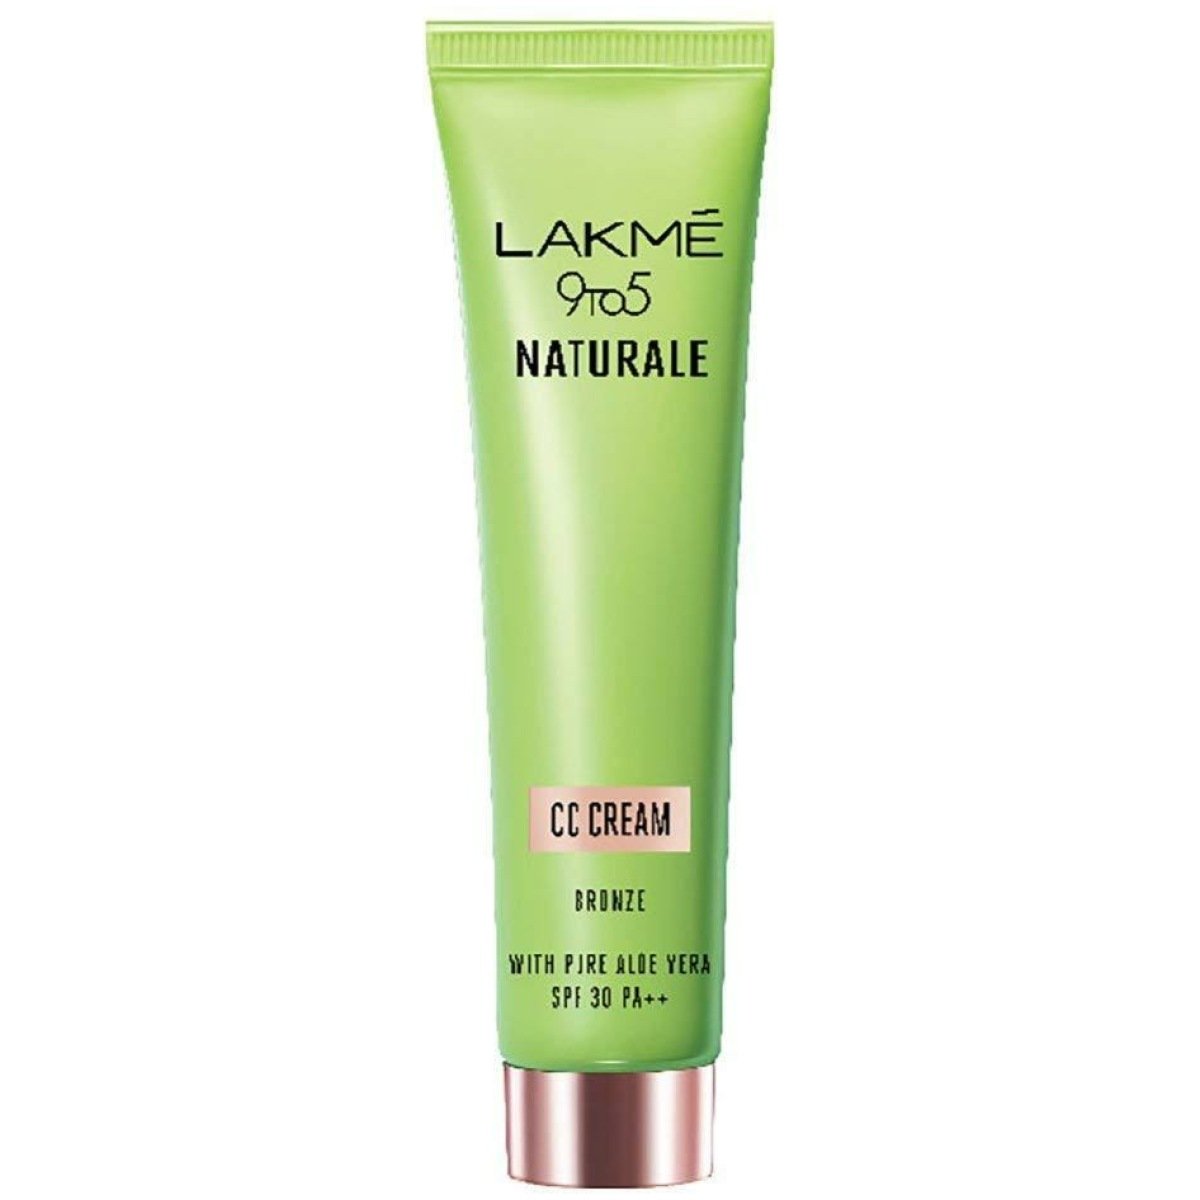 Lakme 9 to 5 Naturale CC Cream Bronze Spf 30 PA++30 g